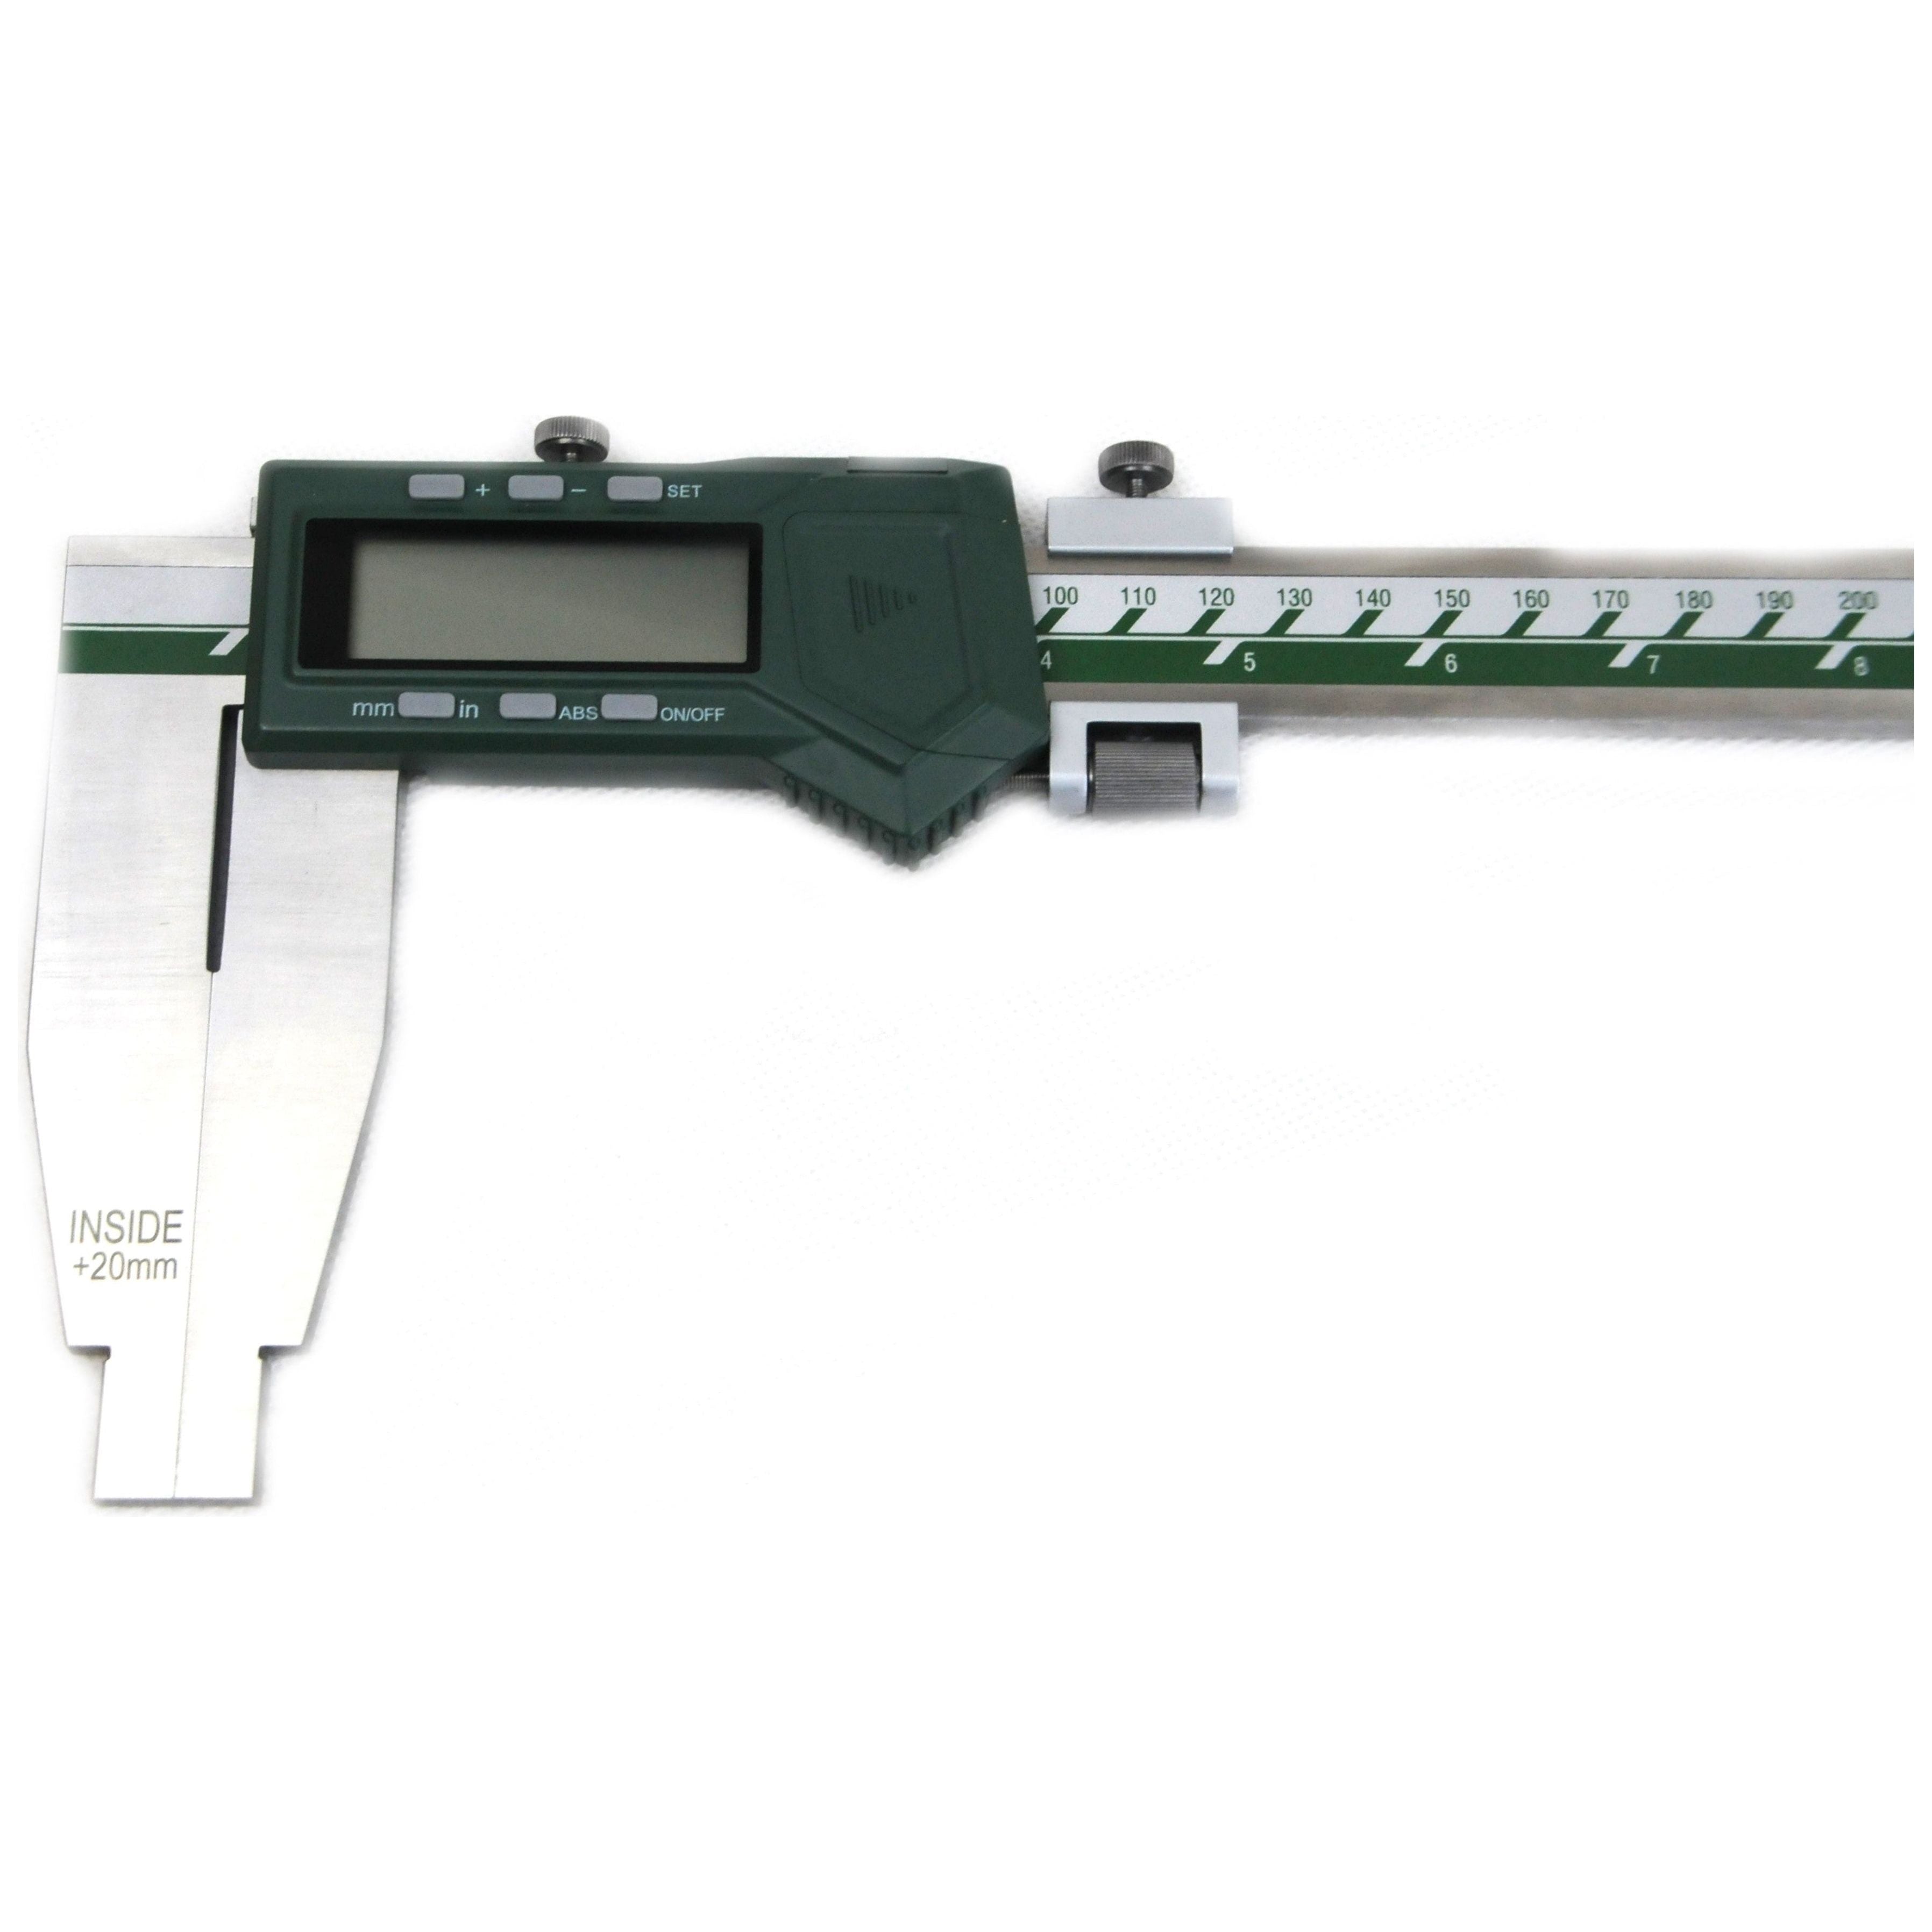 Insize Long Jaw Digital Caliper  0-1500mm / 0-60" Range Series 1106-1502